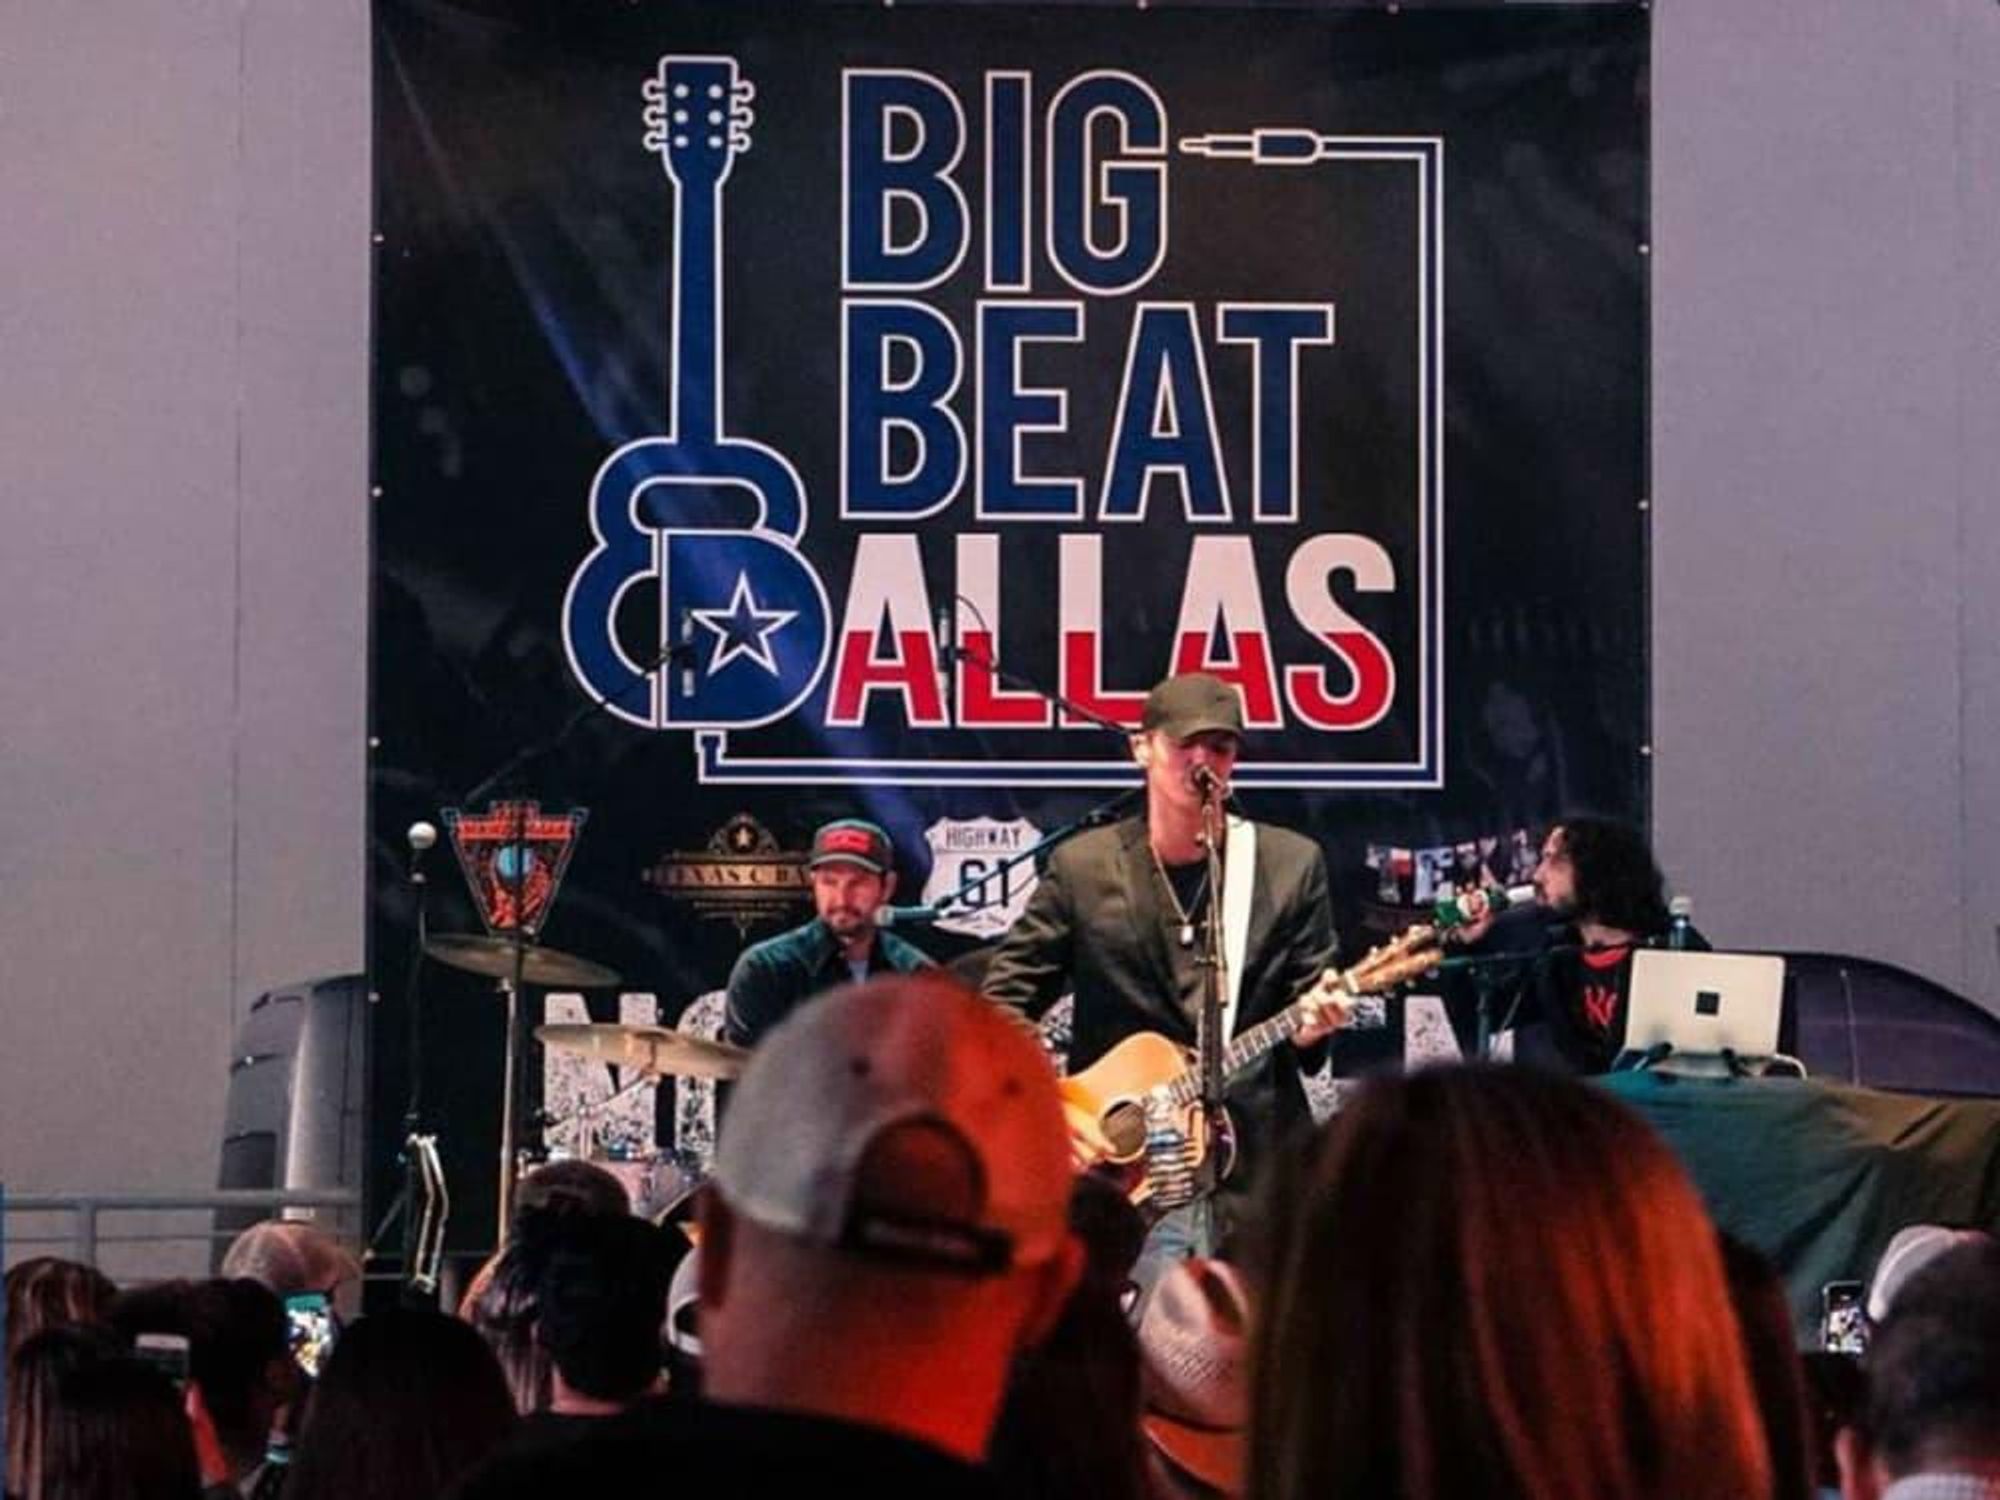 Big Beat Dallas